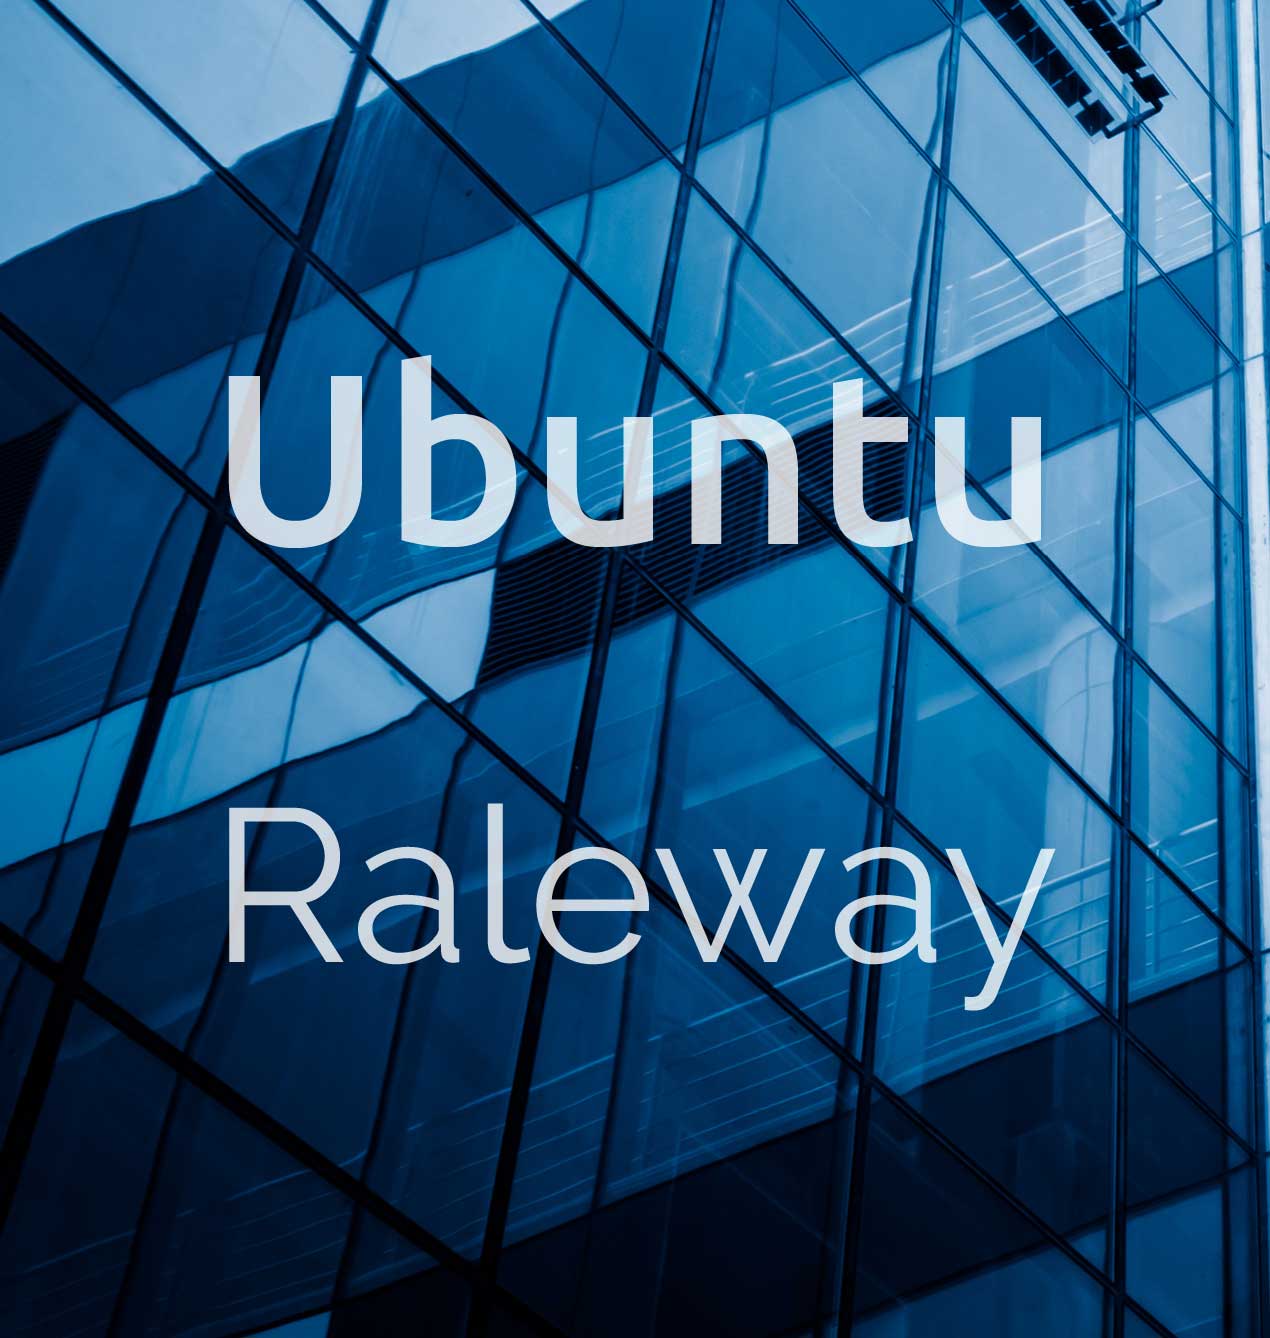 acro uses ubuntu and raleway for its brand typefaces